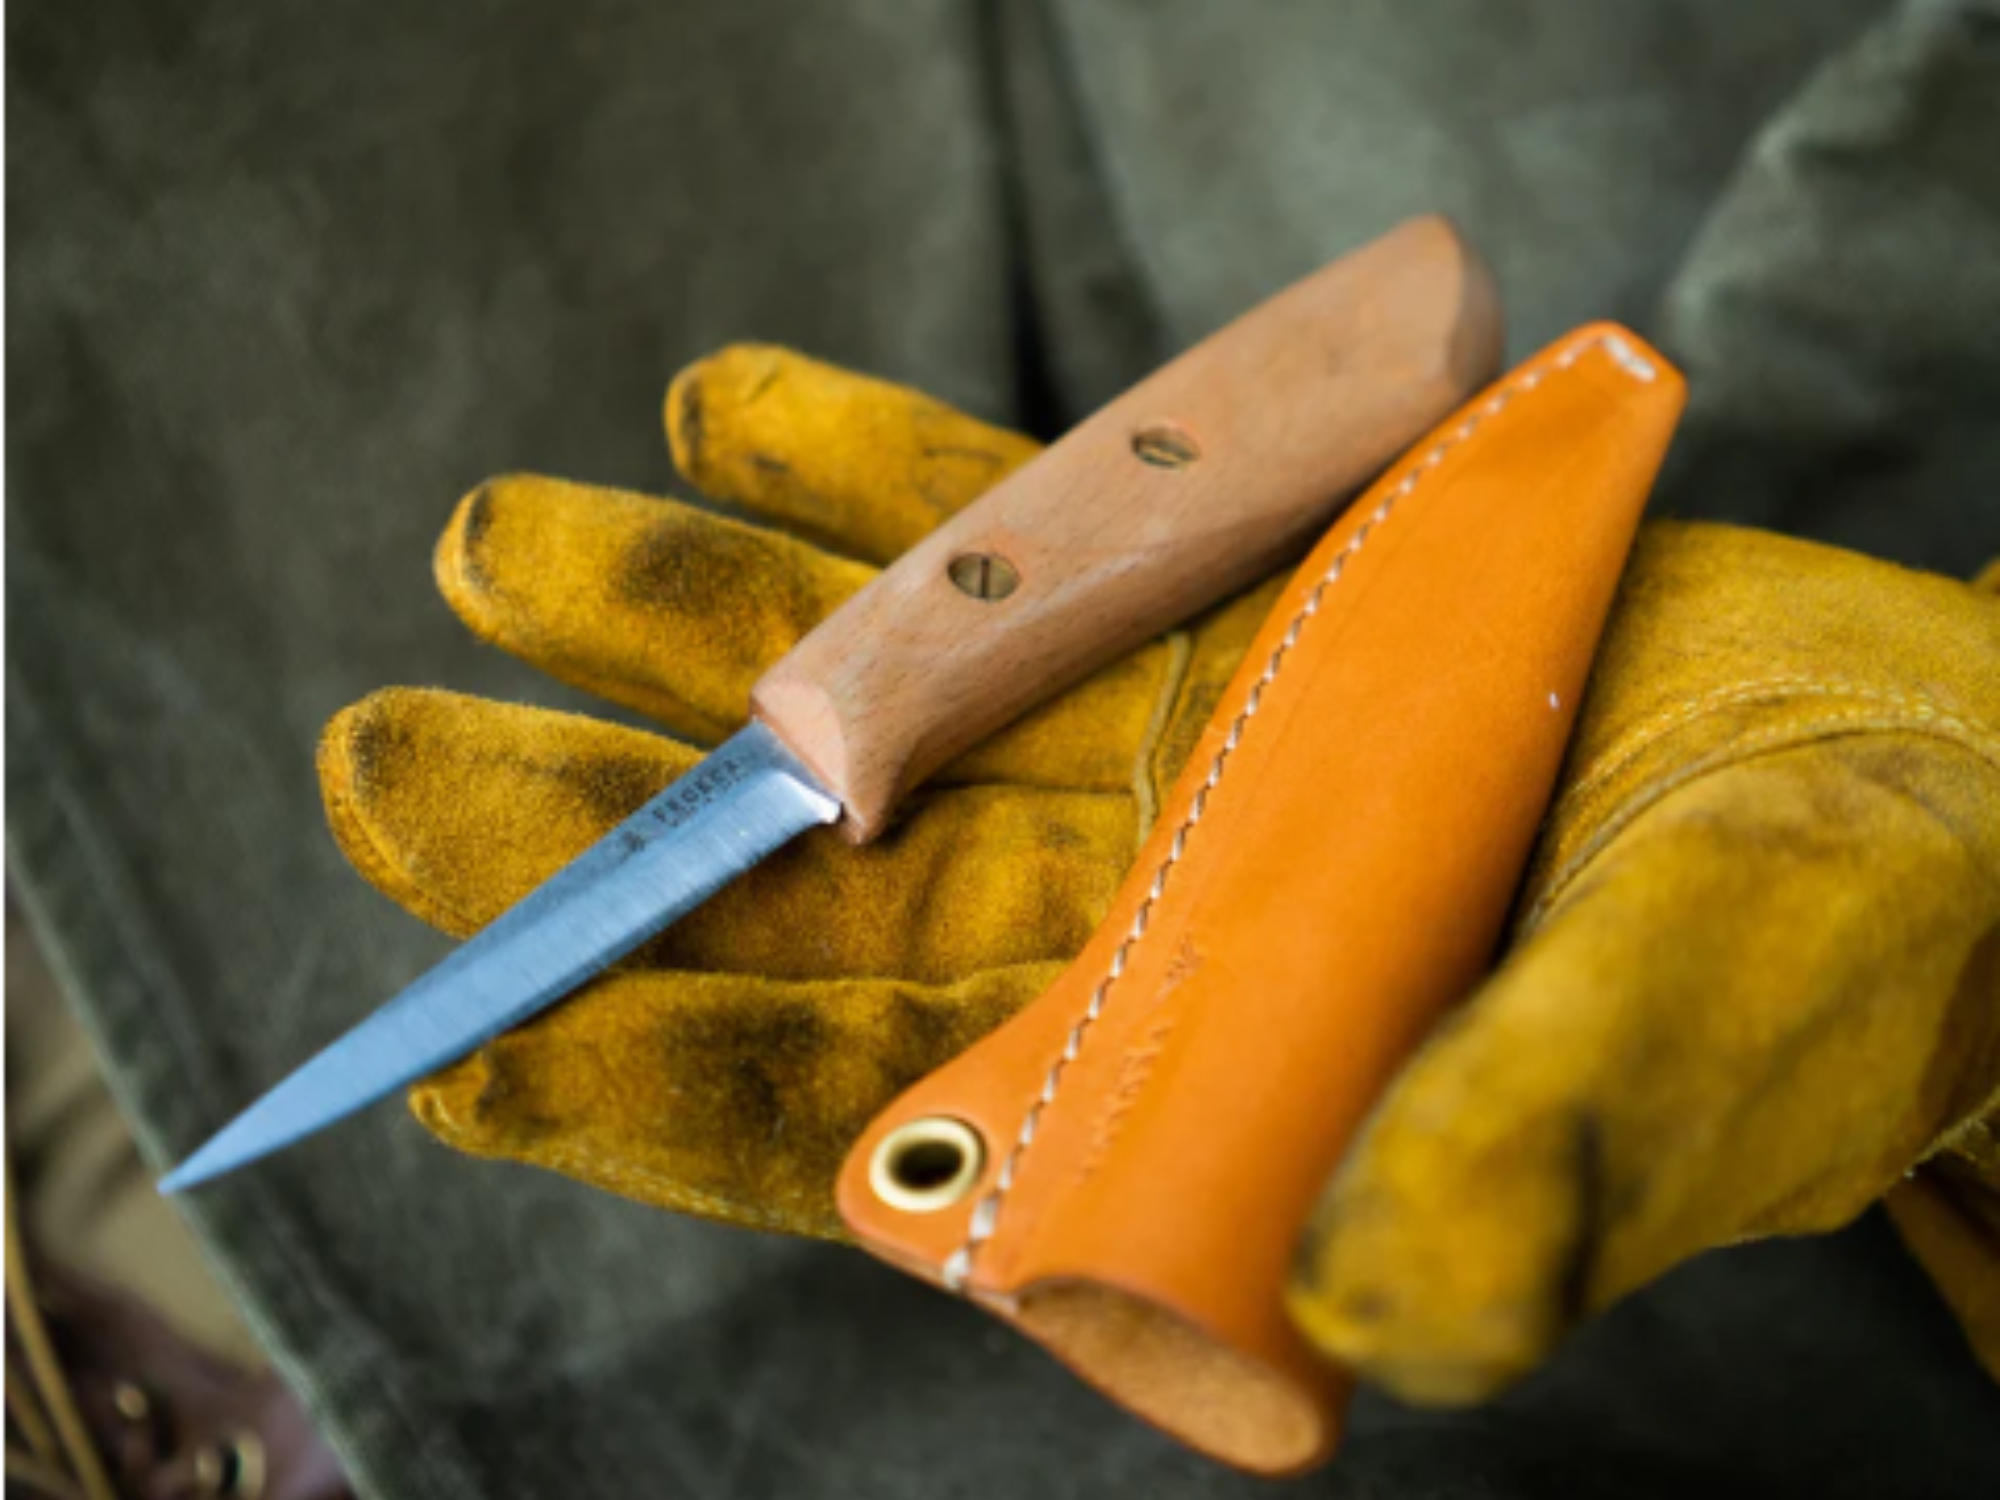 Fedeca It's My Knife Kibori Carving knife kit – Tinker and Fix